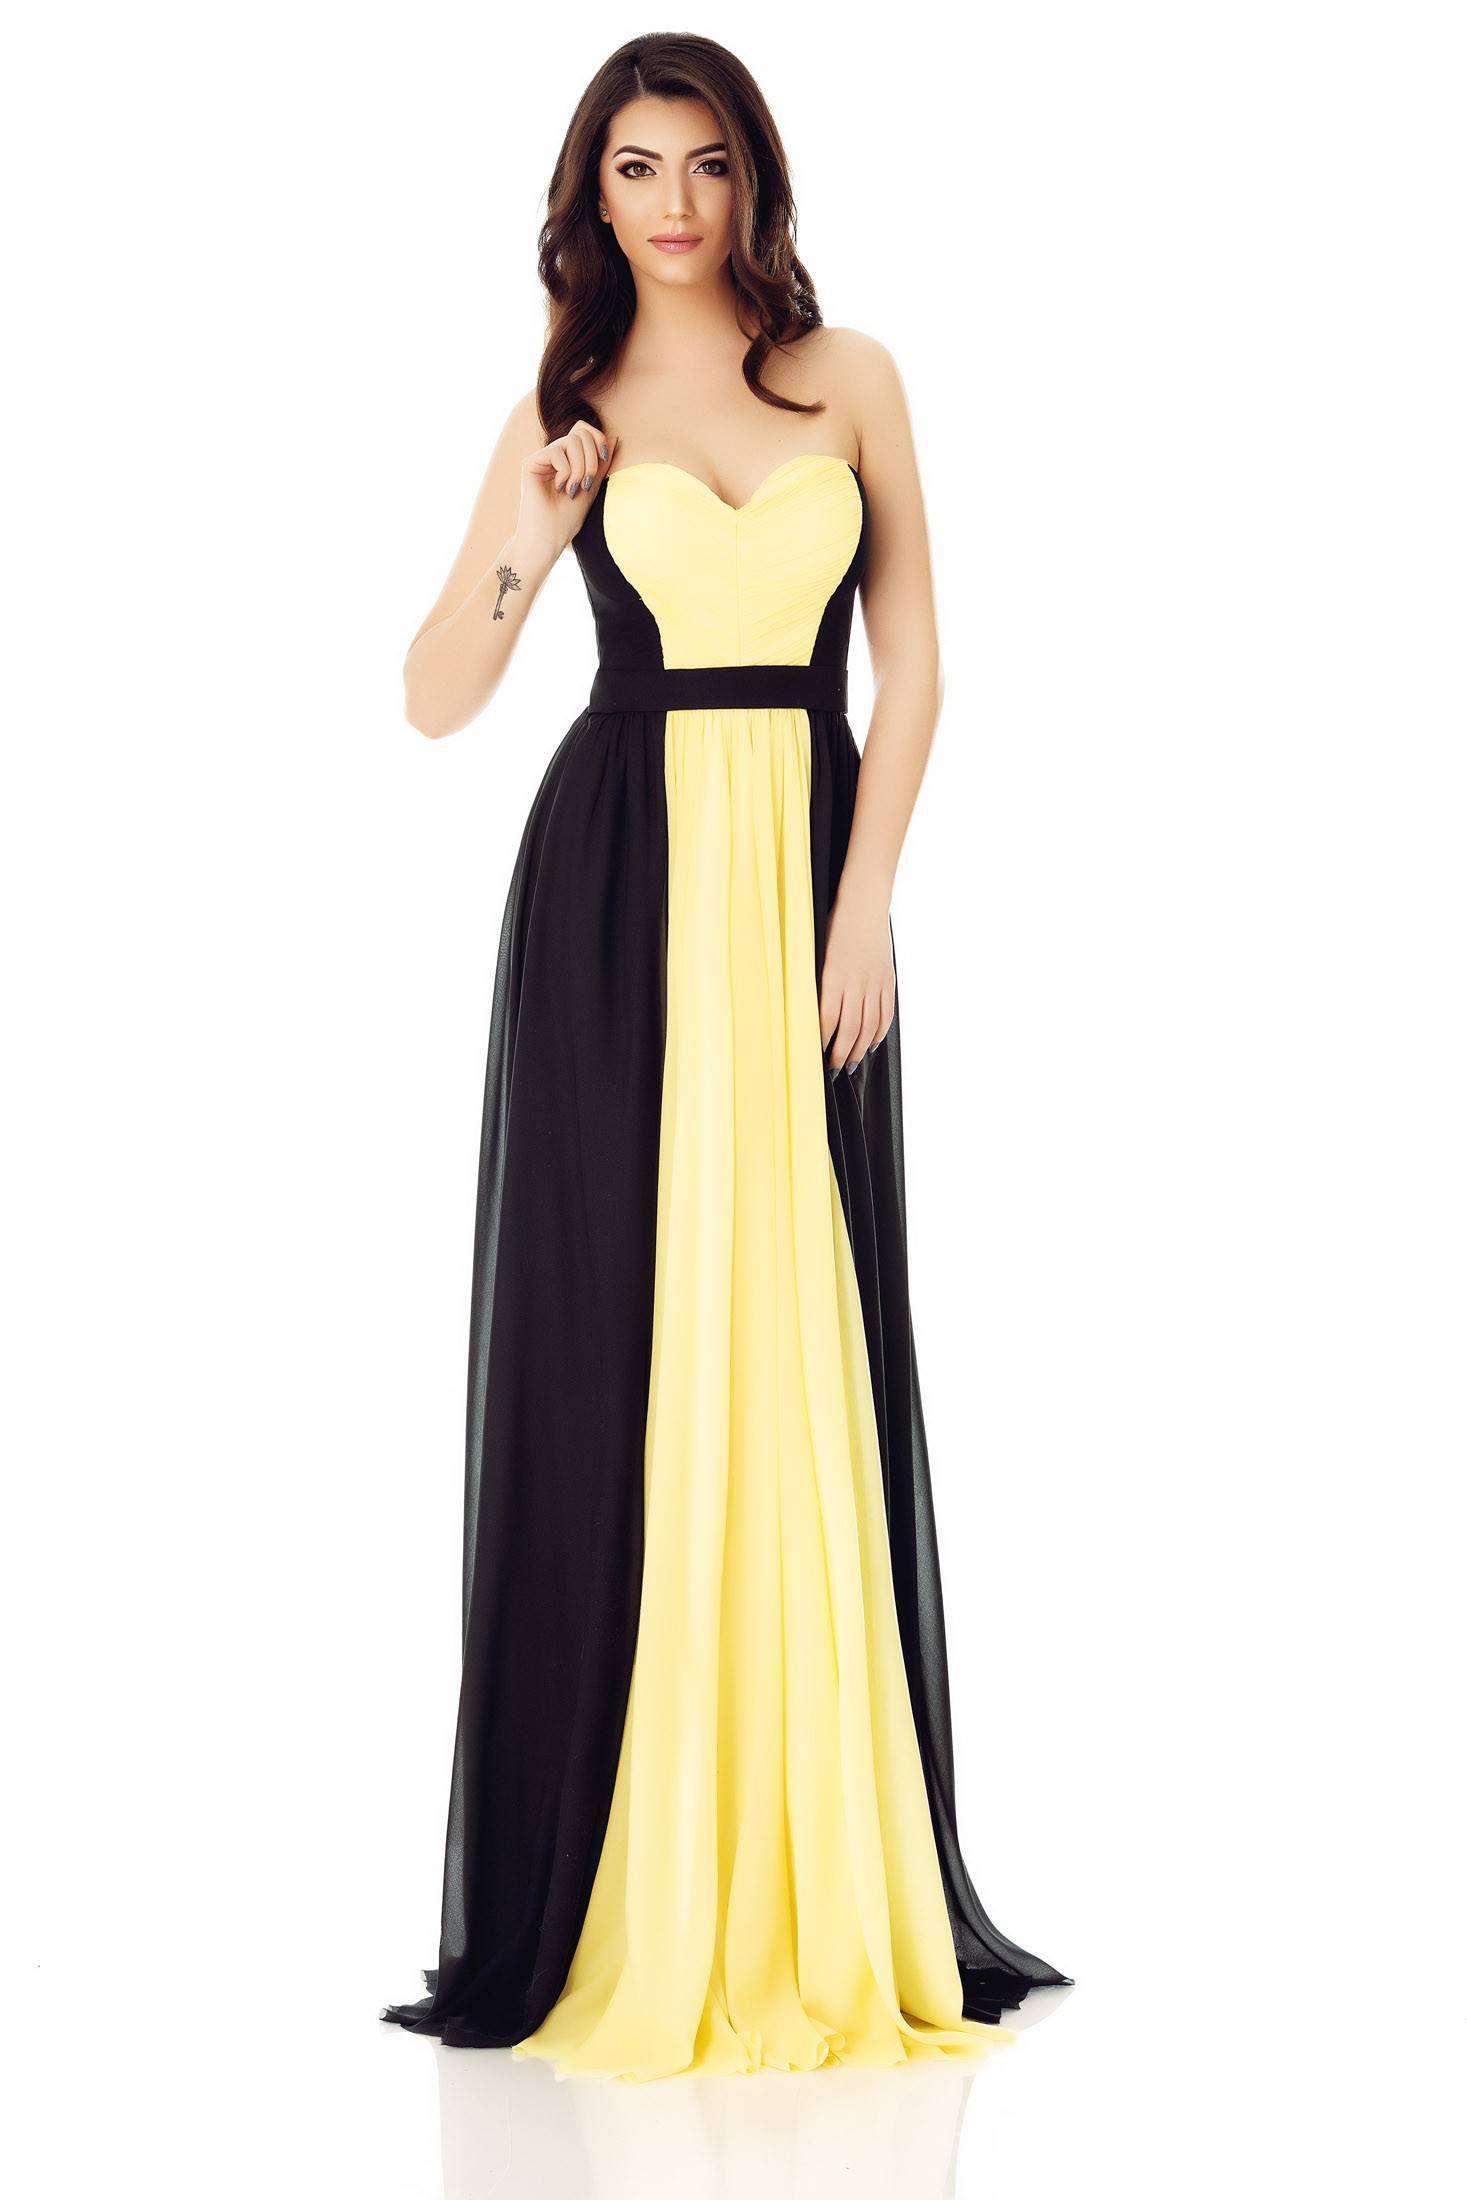 Rochie lungă din voal galben şi negru Anabel cu bust tip corset